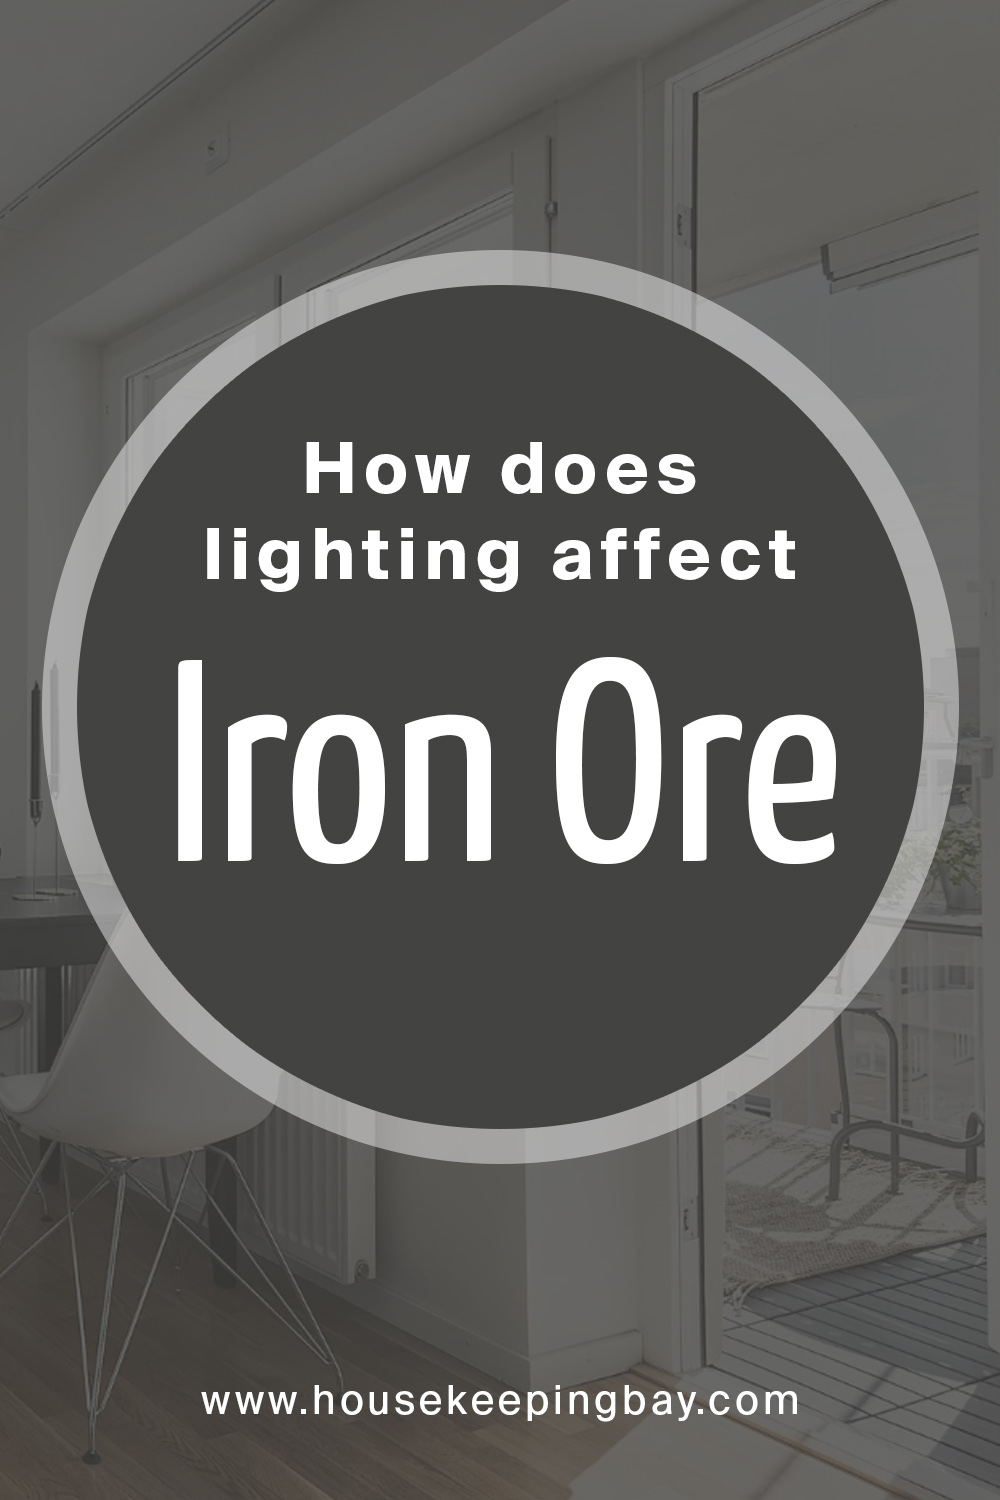 How the iron ore React to Light